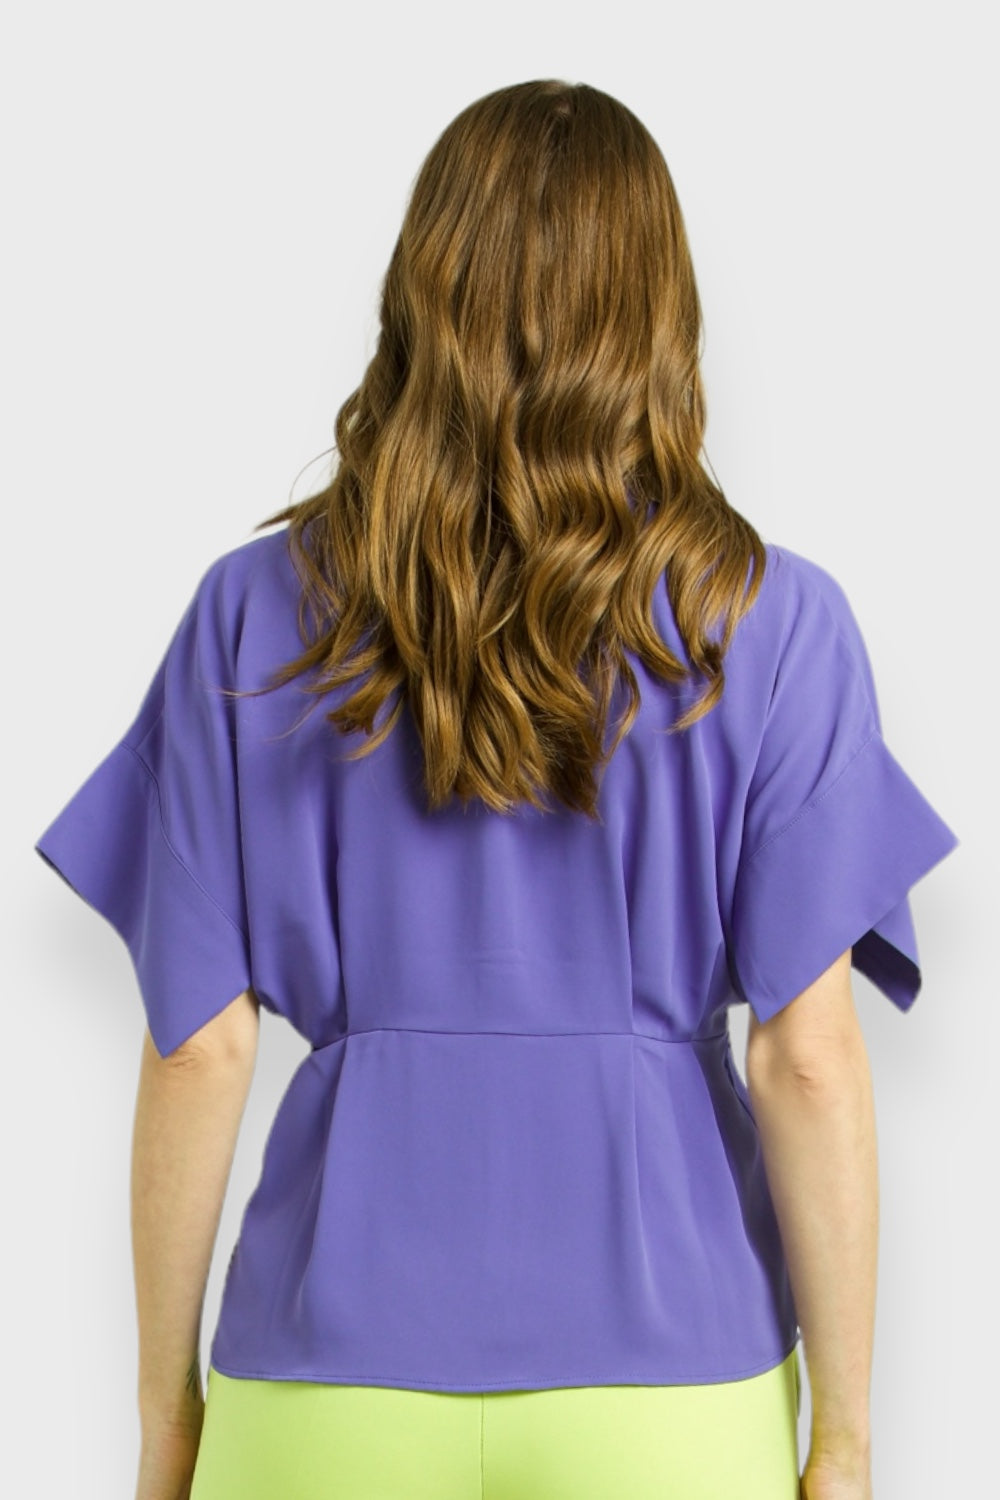 Lilac Short Sleeves Peplum Blouse Top by Enhle Italian Women's Clothing